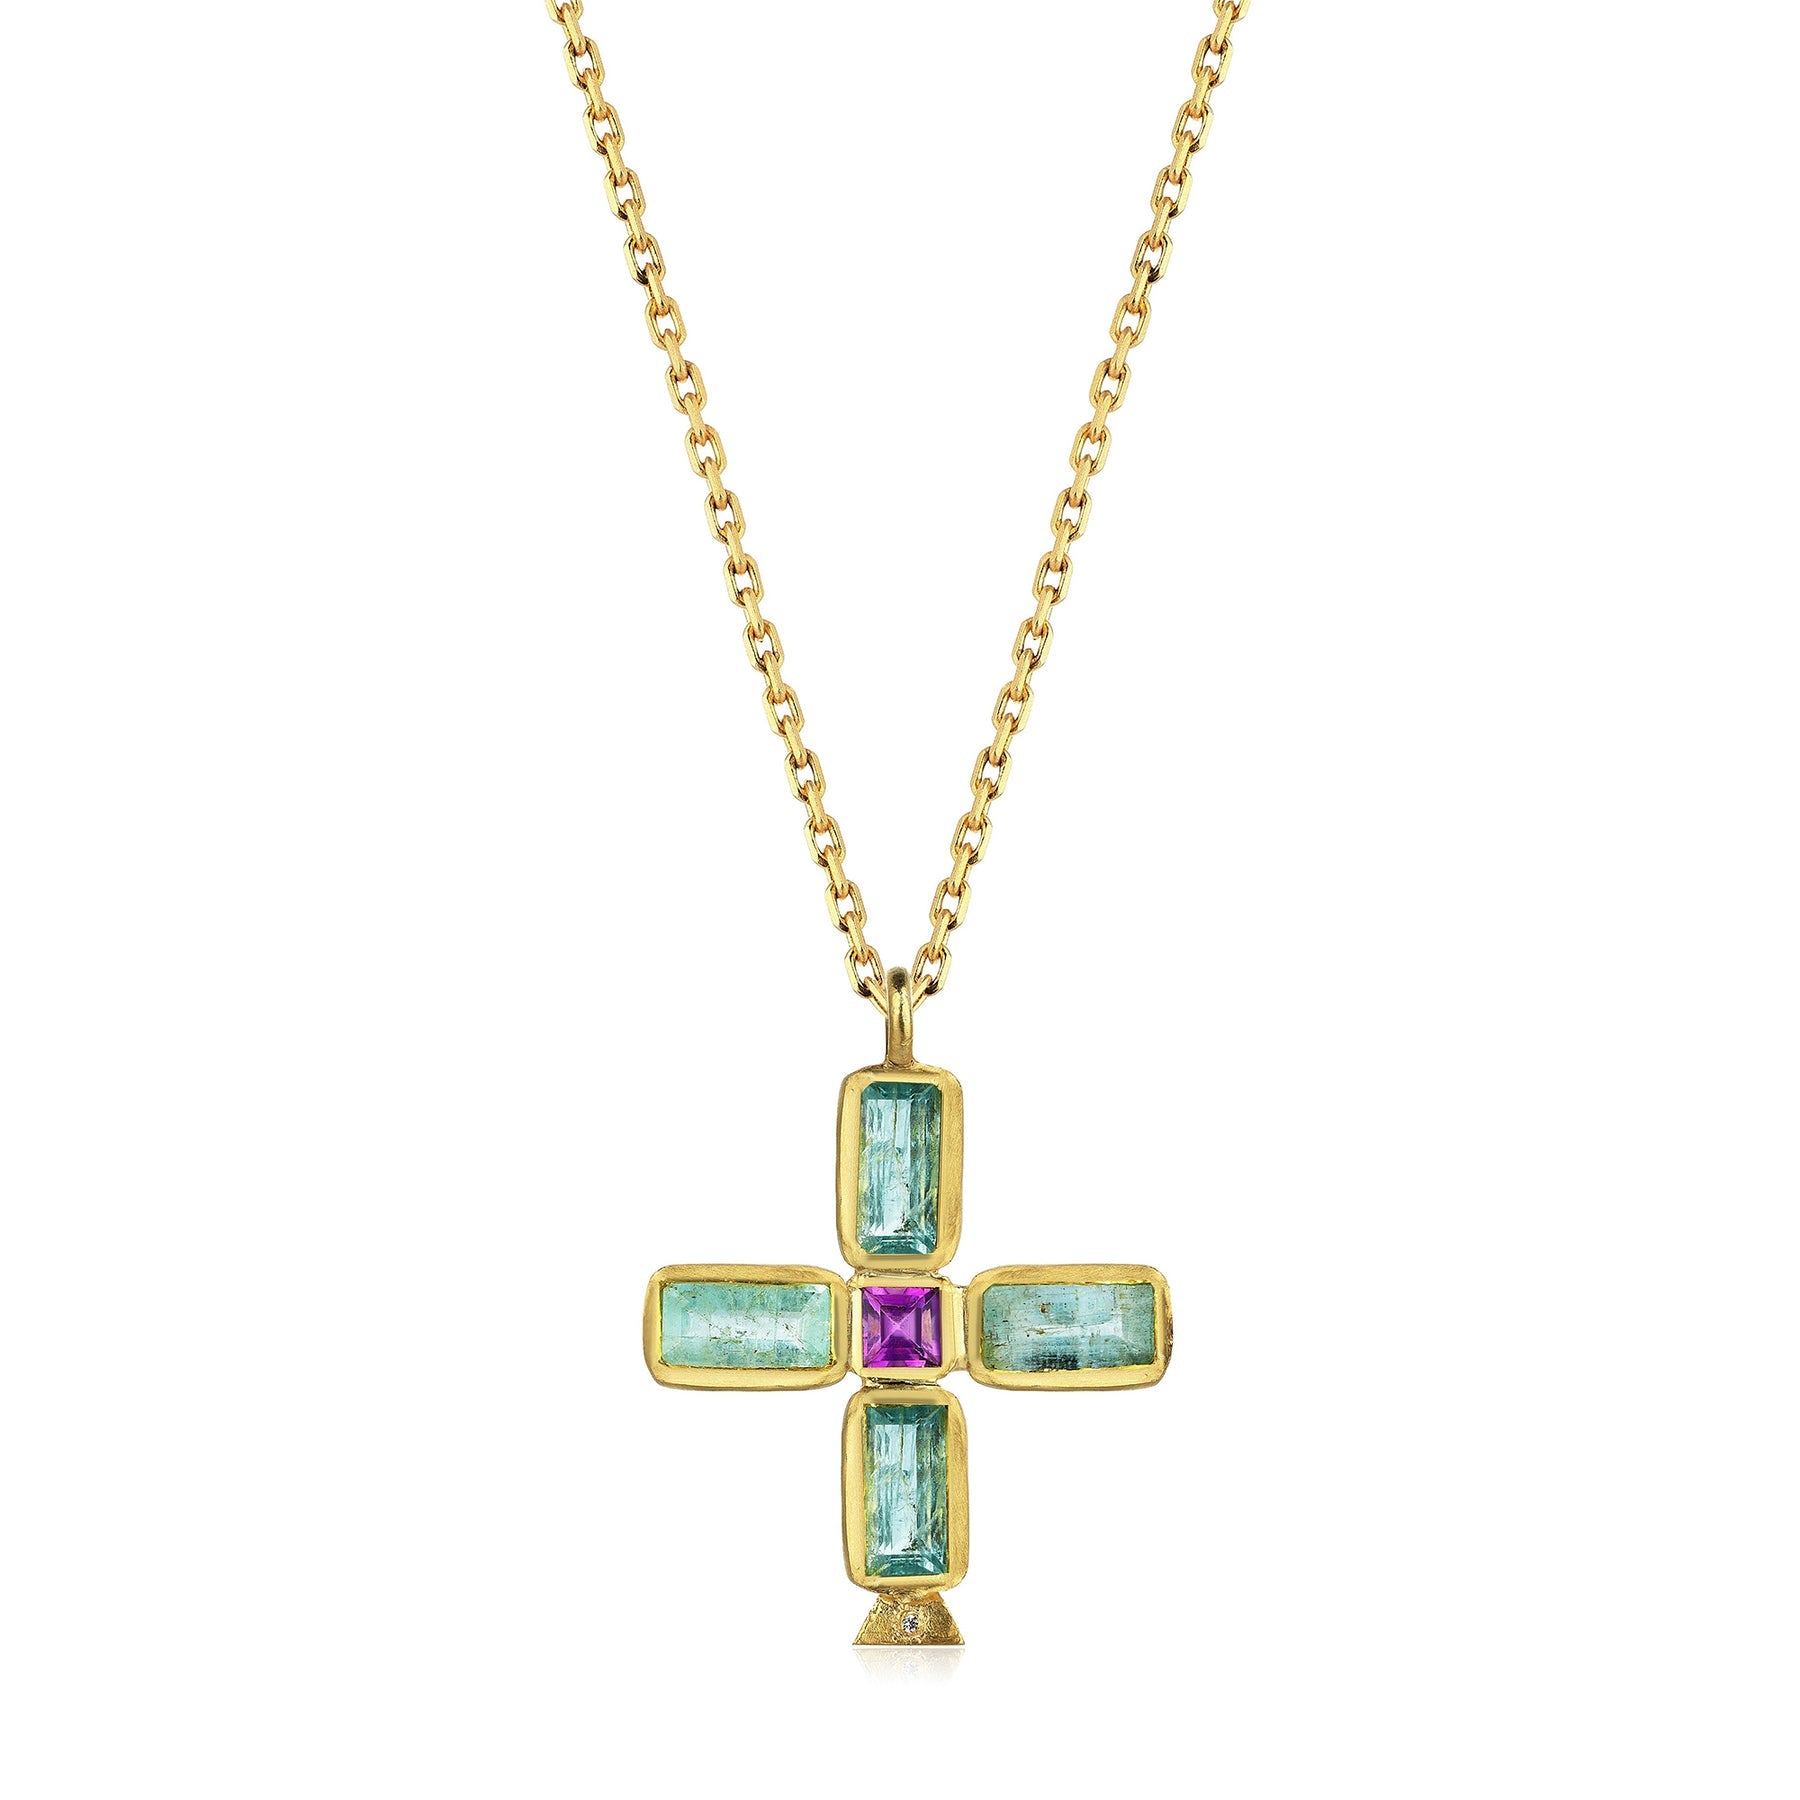 The Vatican Cross Necklace